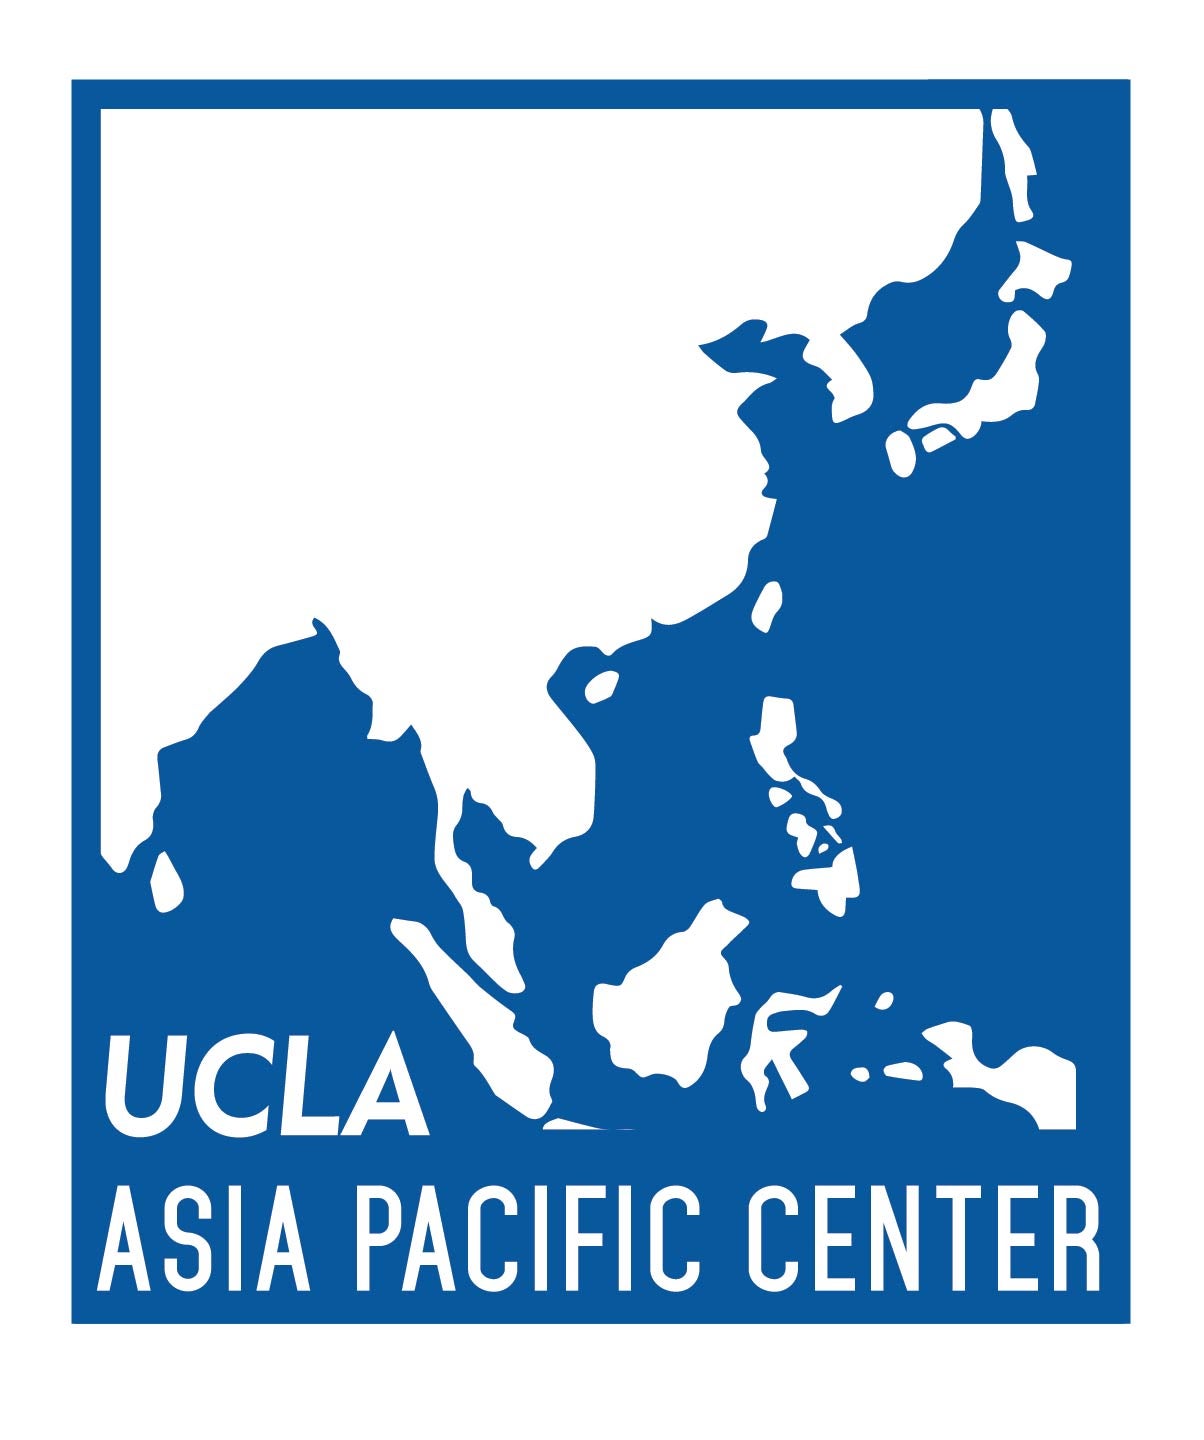 UCLA Asia Pacific Center